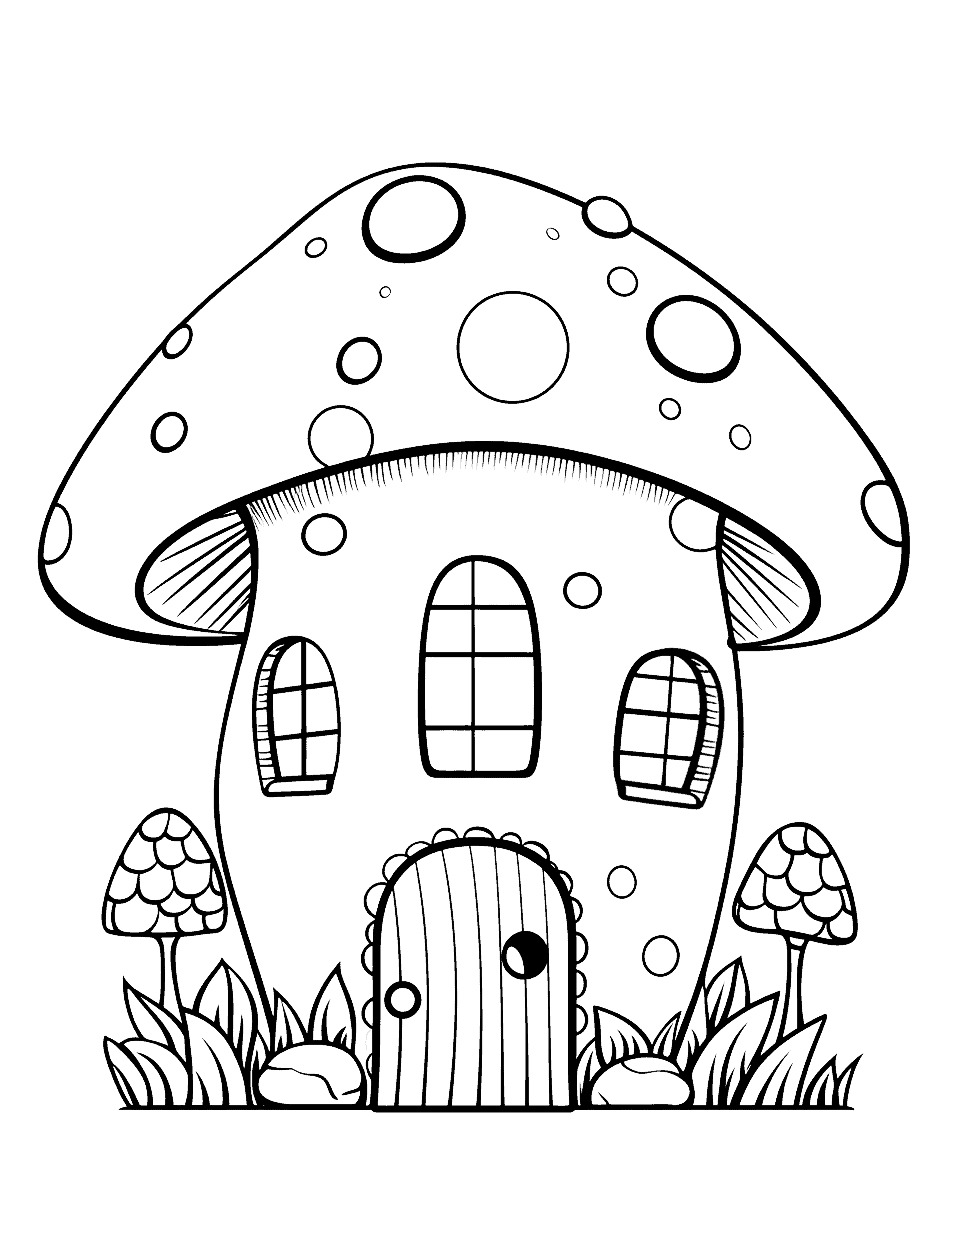 Kawaii Mushroom House Cute Coloring Page - A mushroom-shaped house with cute windows and a door.